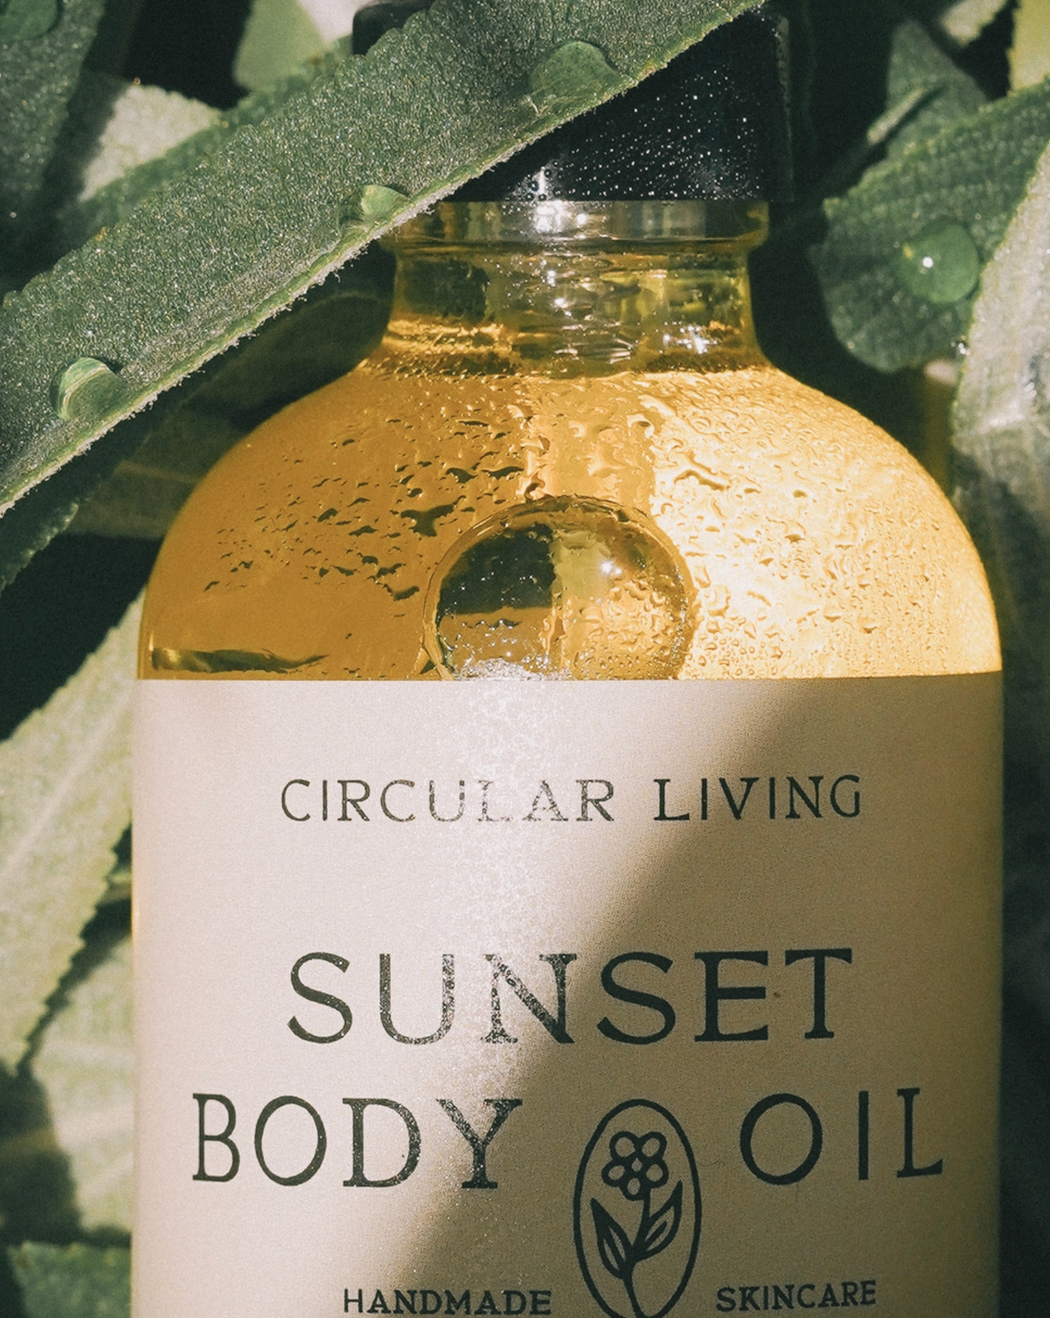 Circular Living :: Sunset Body Oil, Clary Sage